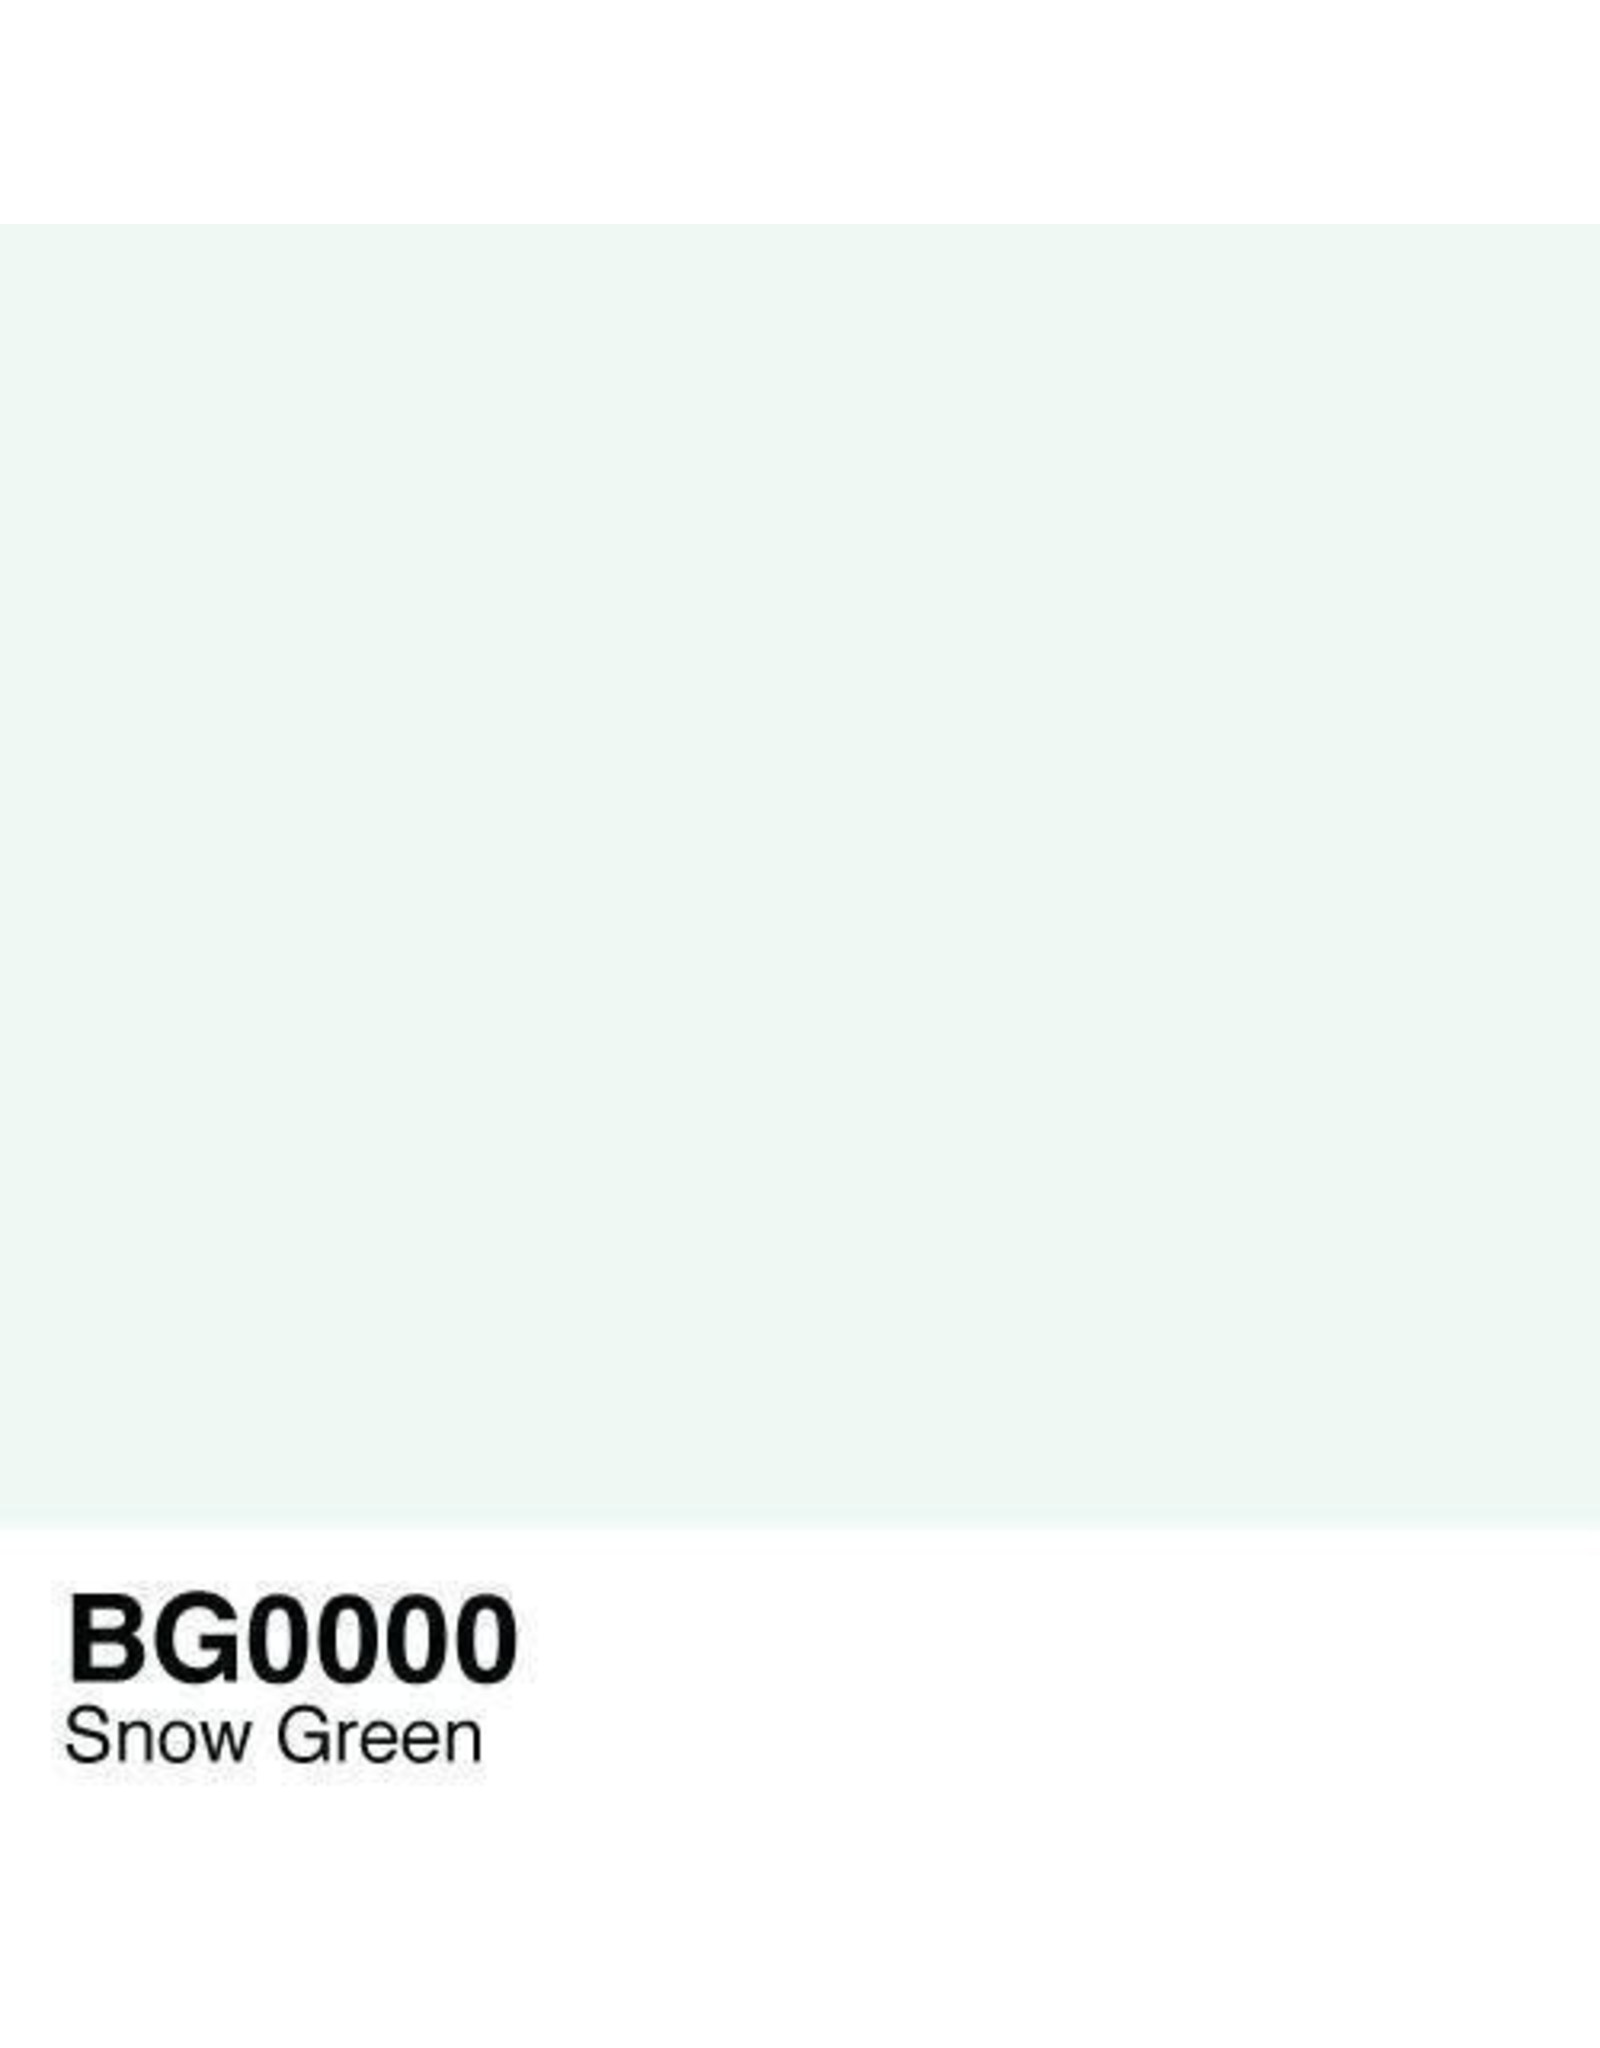 COPIC COPIC BG0000 SNOW GREEN SKETCH MARKER